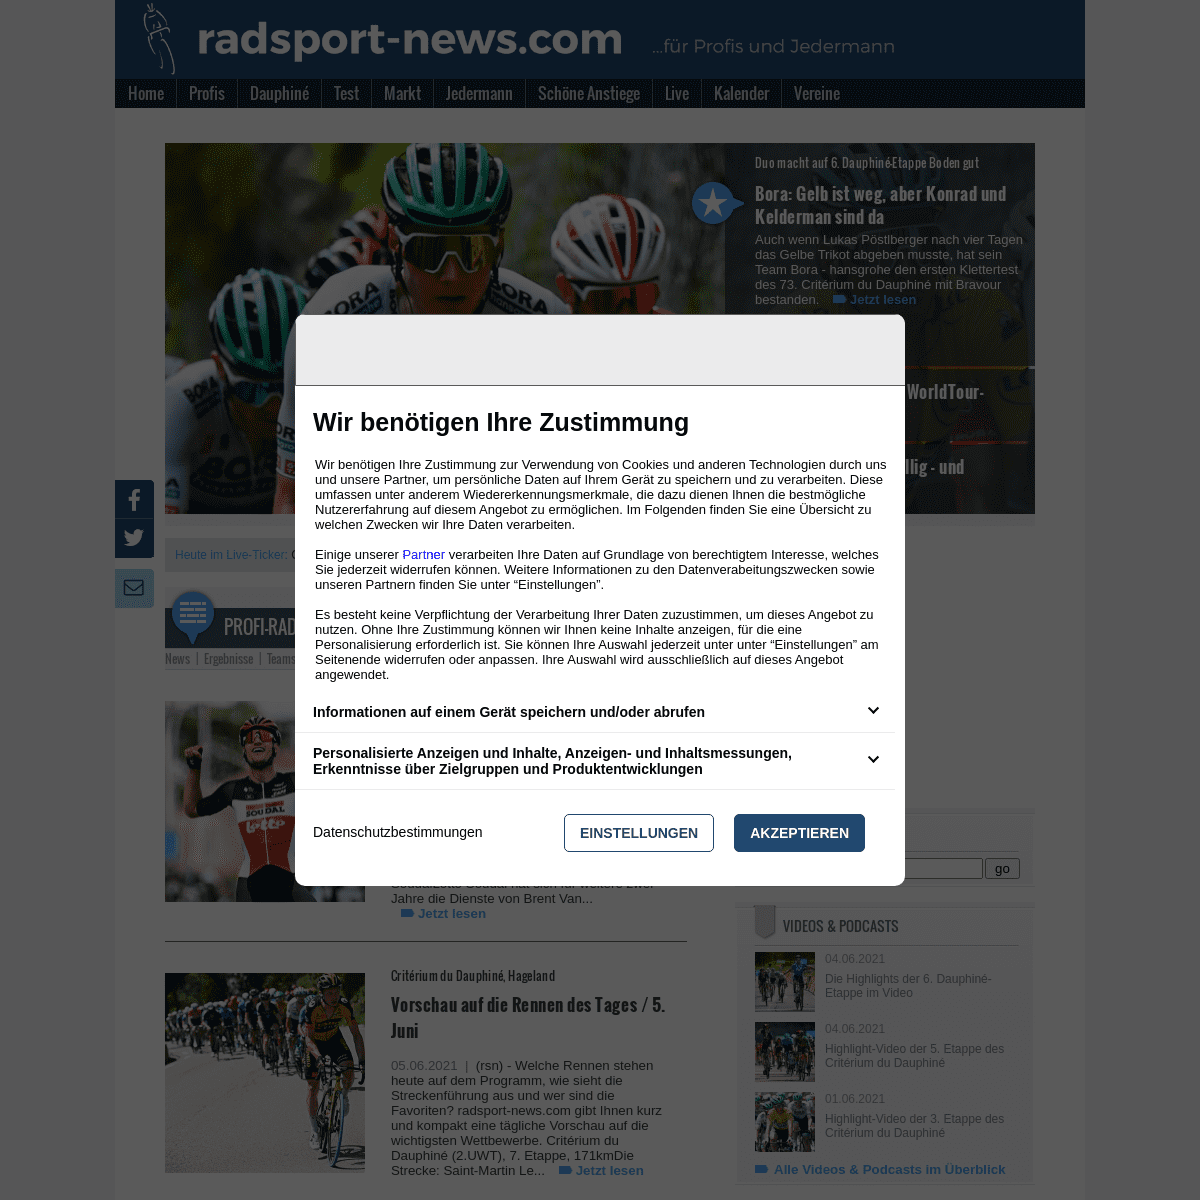 A complete backup of https://radsport-news.com